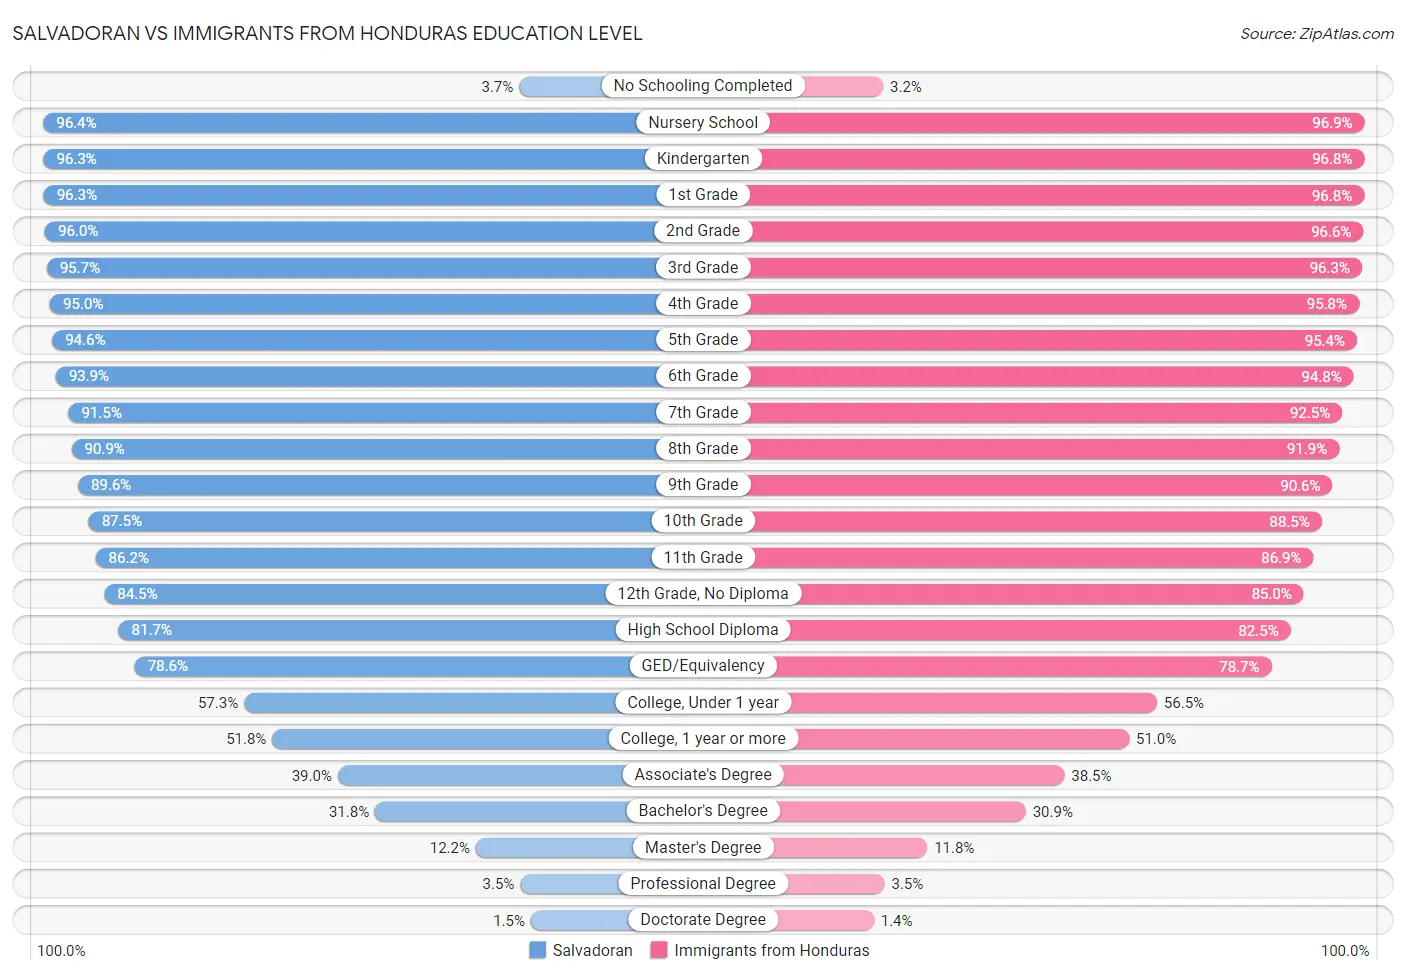 Salvadoran vs Immigrants from Honduras Education Level